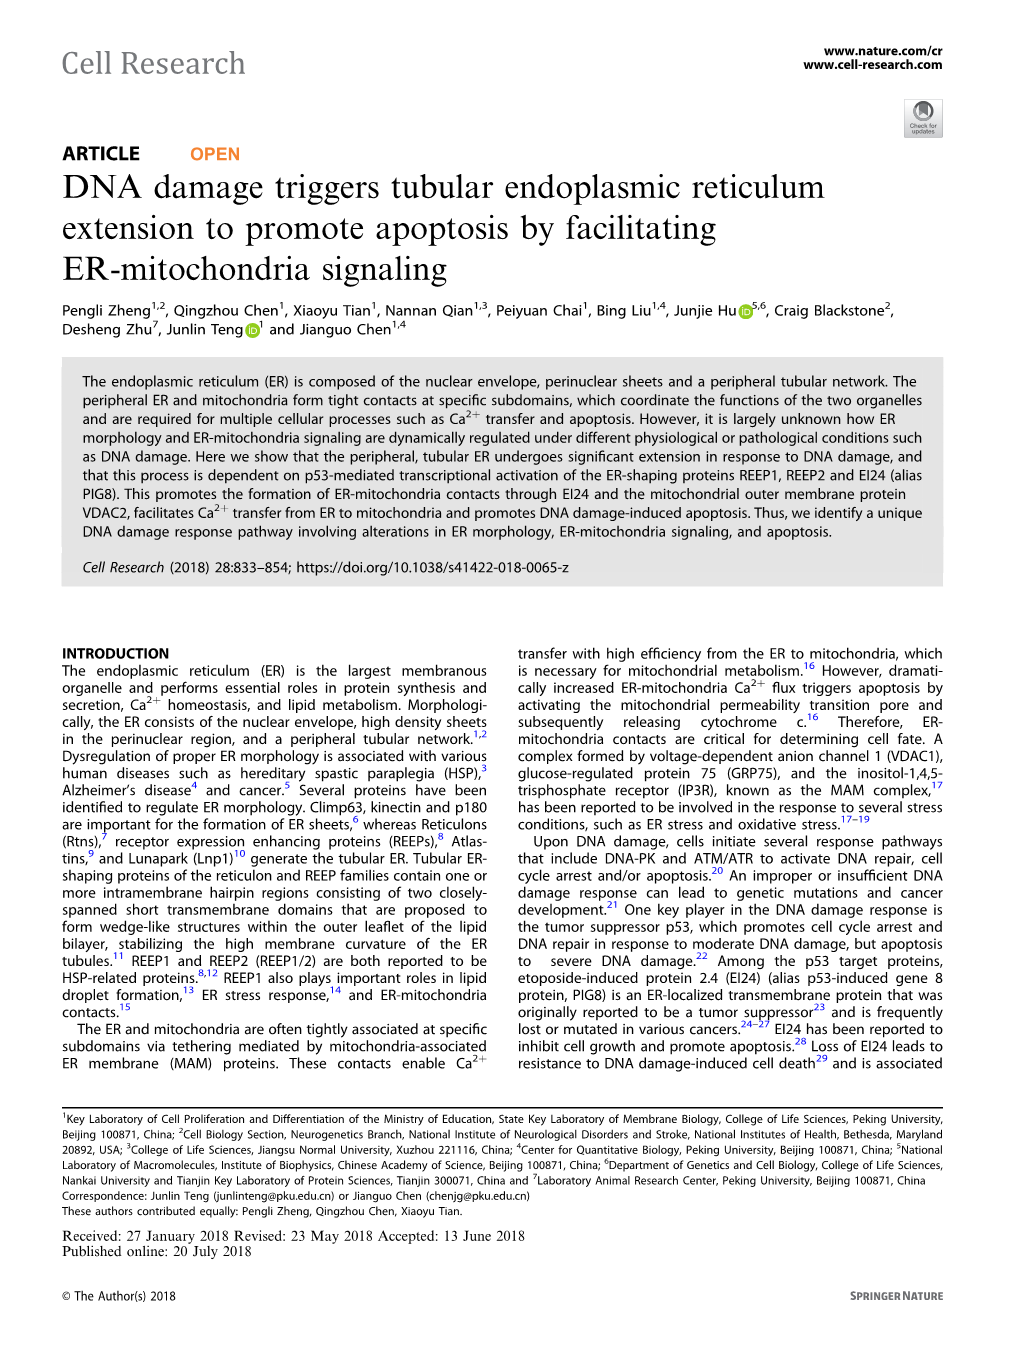 DNA Damage Triggers Tubular Endoplasmic Reticulum Extension to Promote Apoptosis by Facilitating ER-Mitochondria Signaling